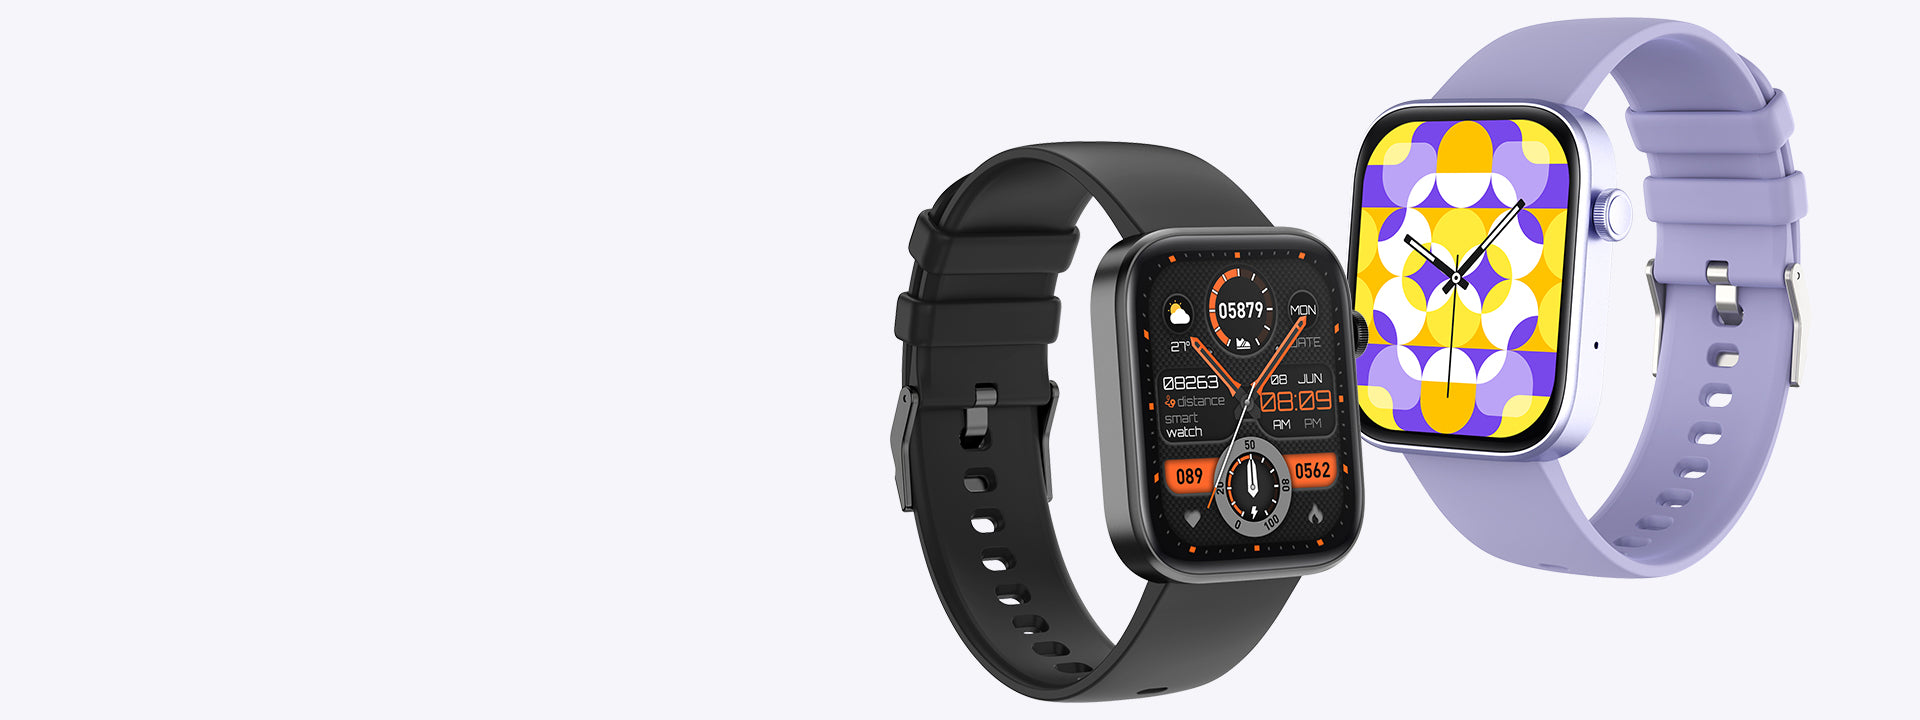 Smart Watch COLMi P71 Appearance Design (1)